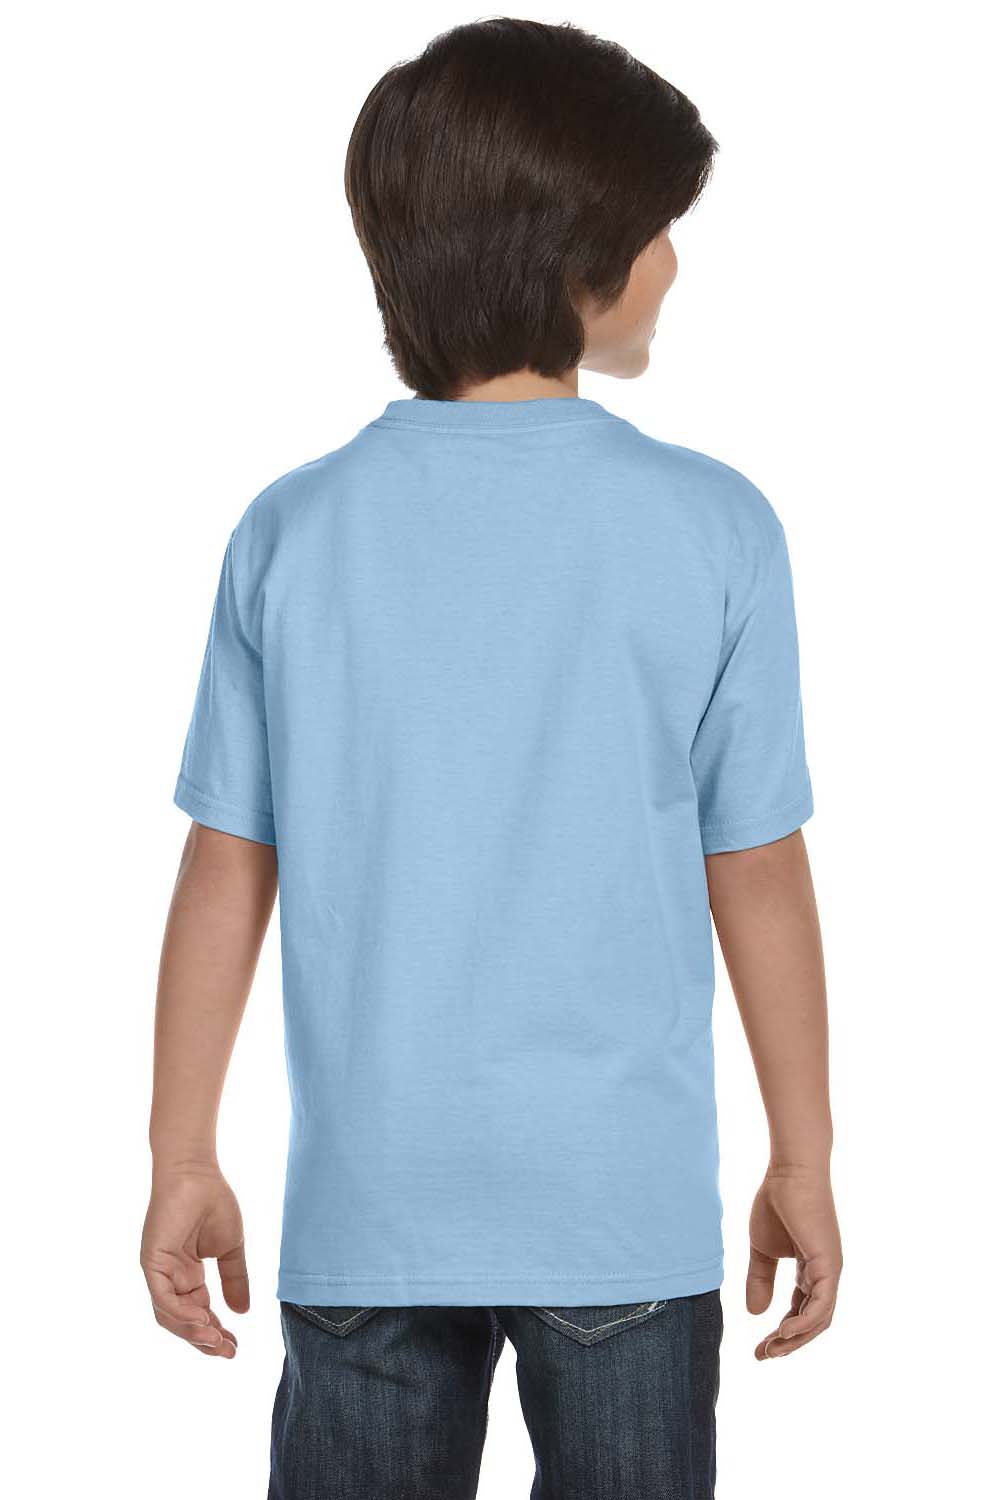 Gildan G800B Youth DryBlend Moisture Wicking Short Sleeve Crewneck T-Shirt Light Blue Back